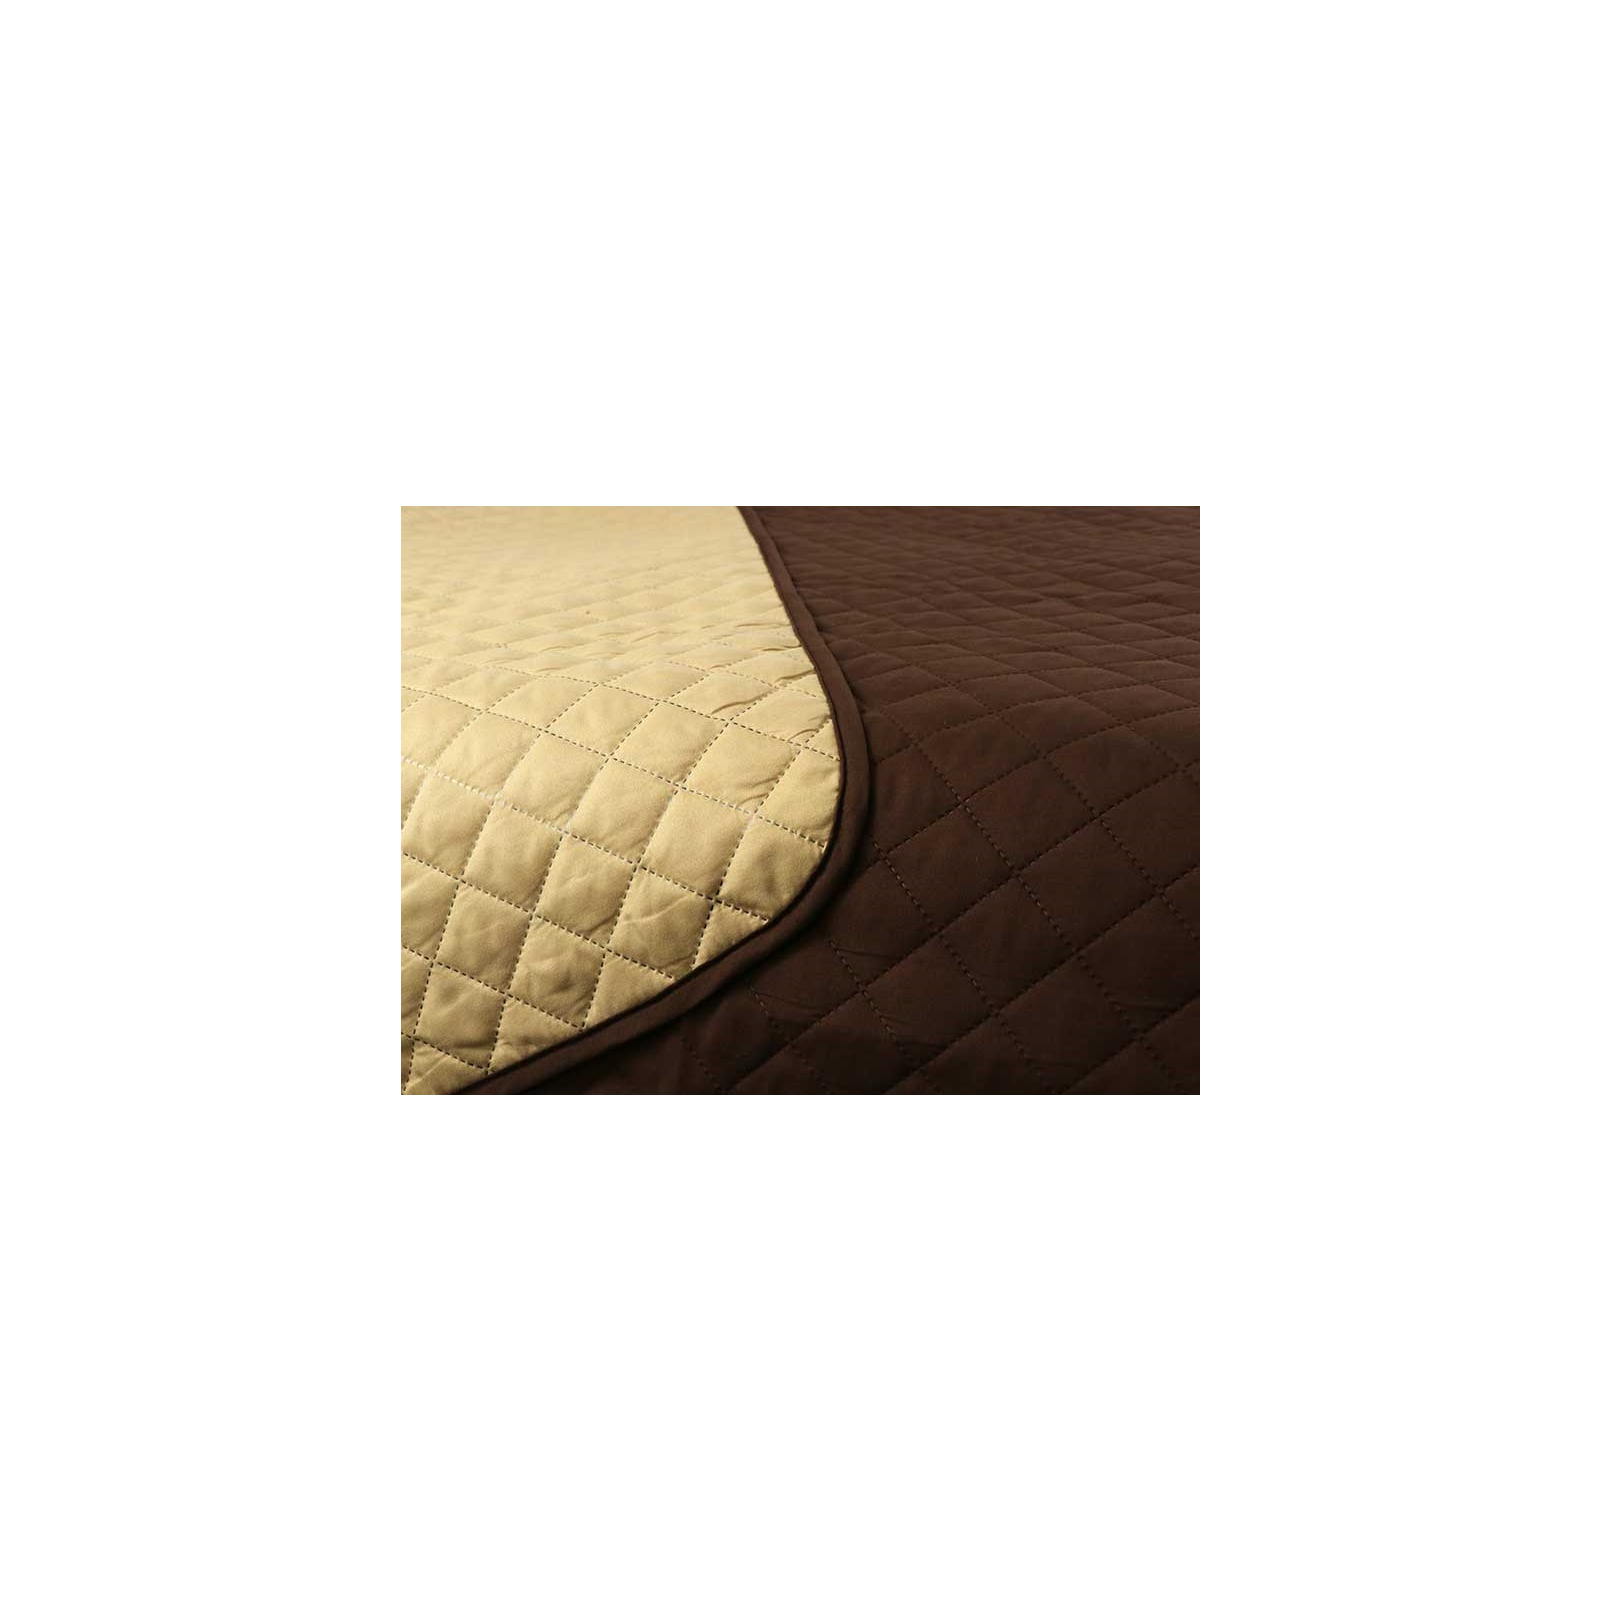 Покрывало Руно Chocolate Ромб 150x212 см (360.52У_Chocolate ромб) изображение 5